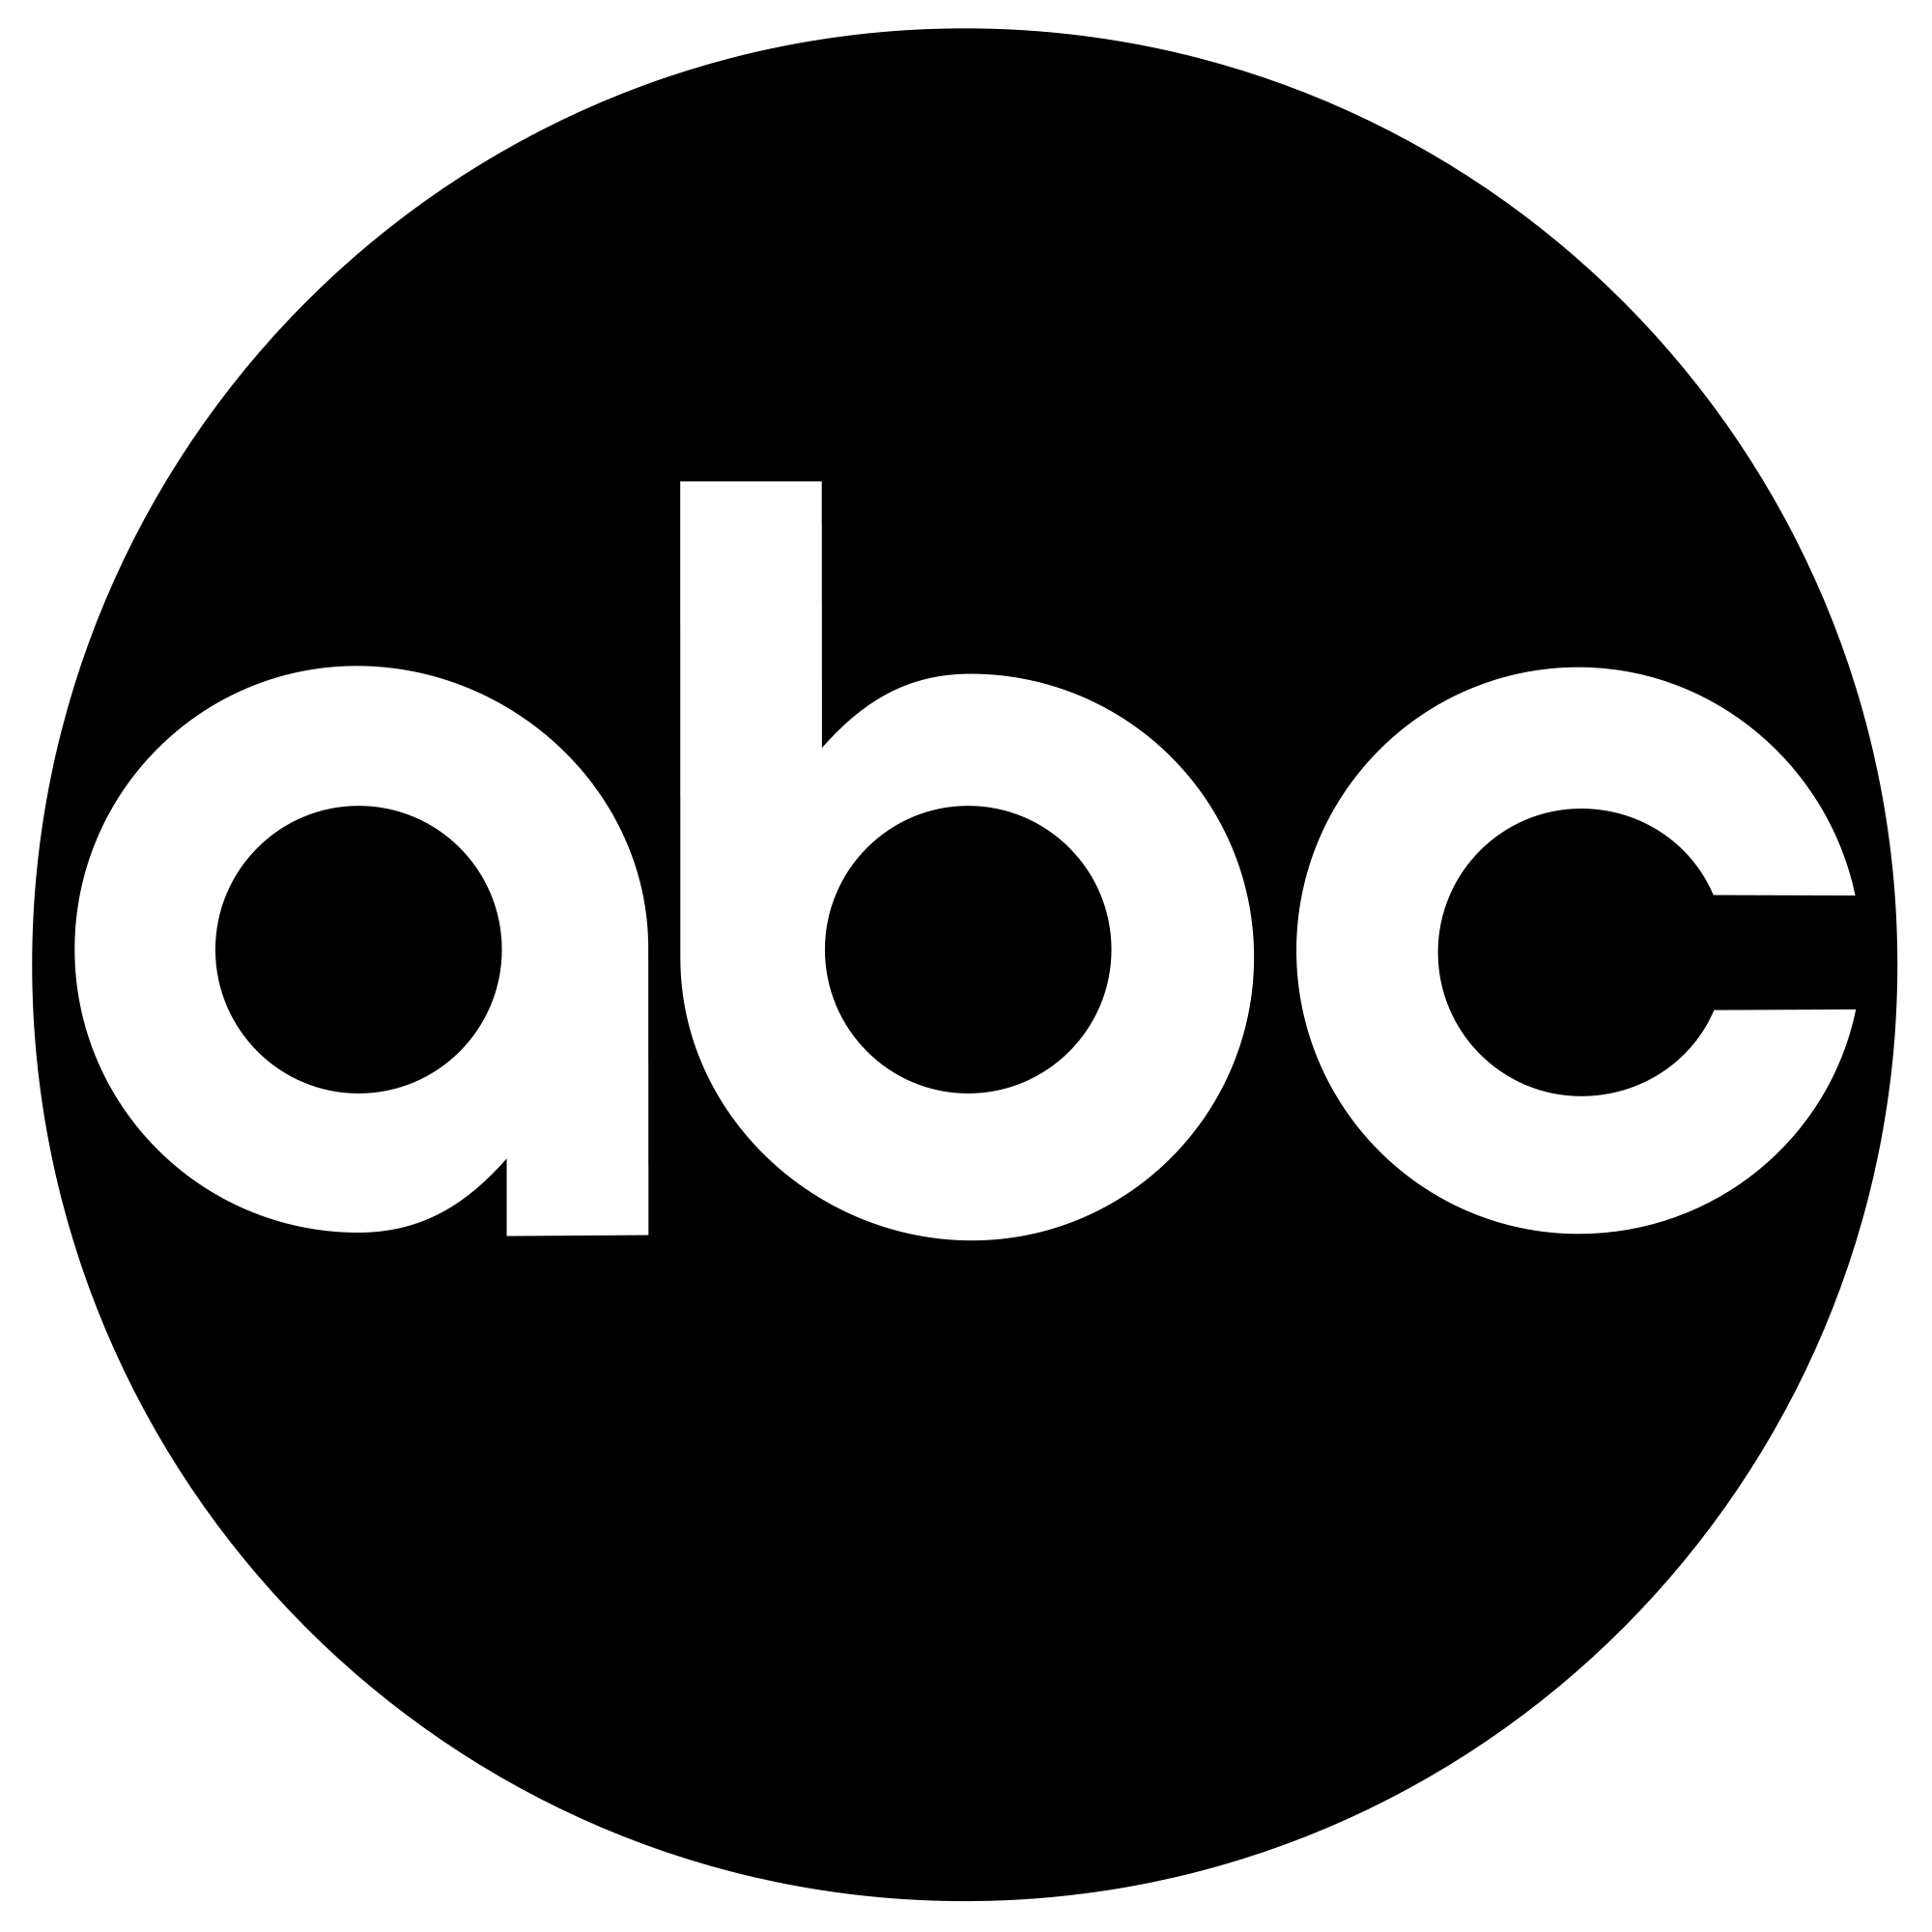 2000px-American_Broadcasting_Company_Logo.svg